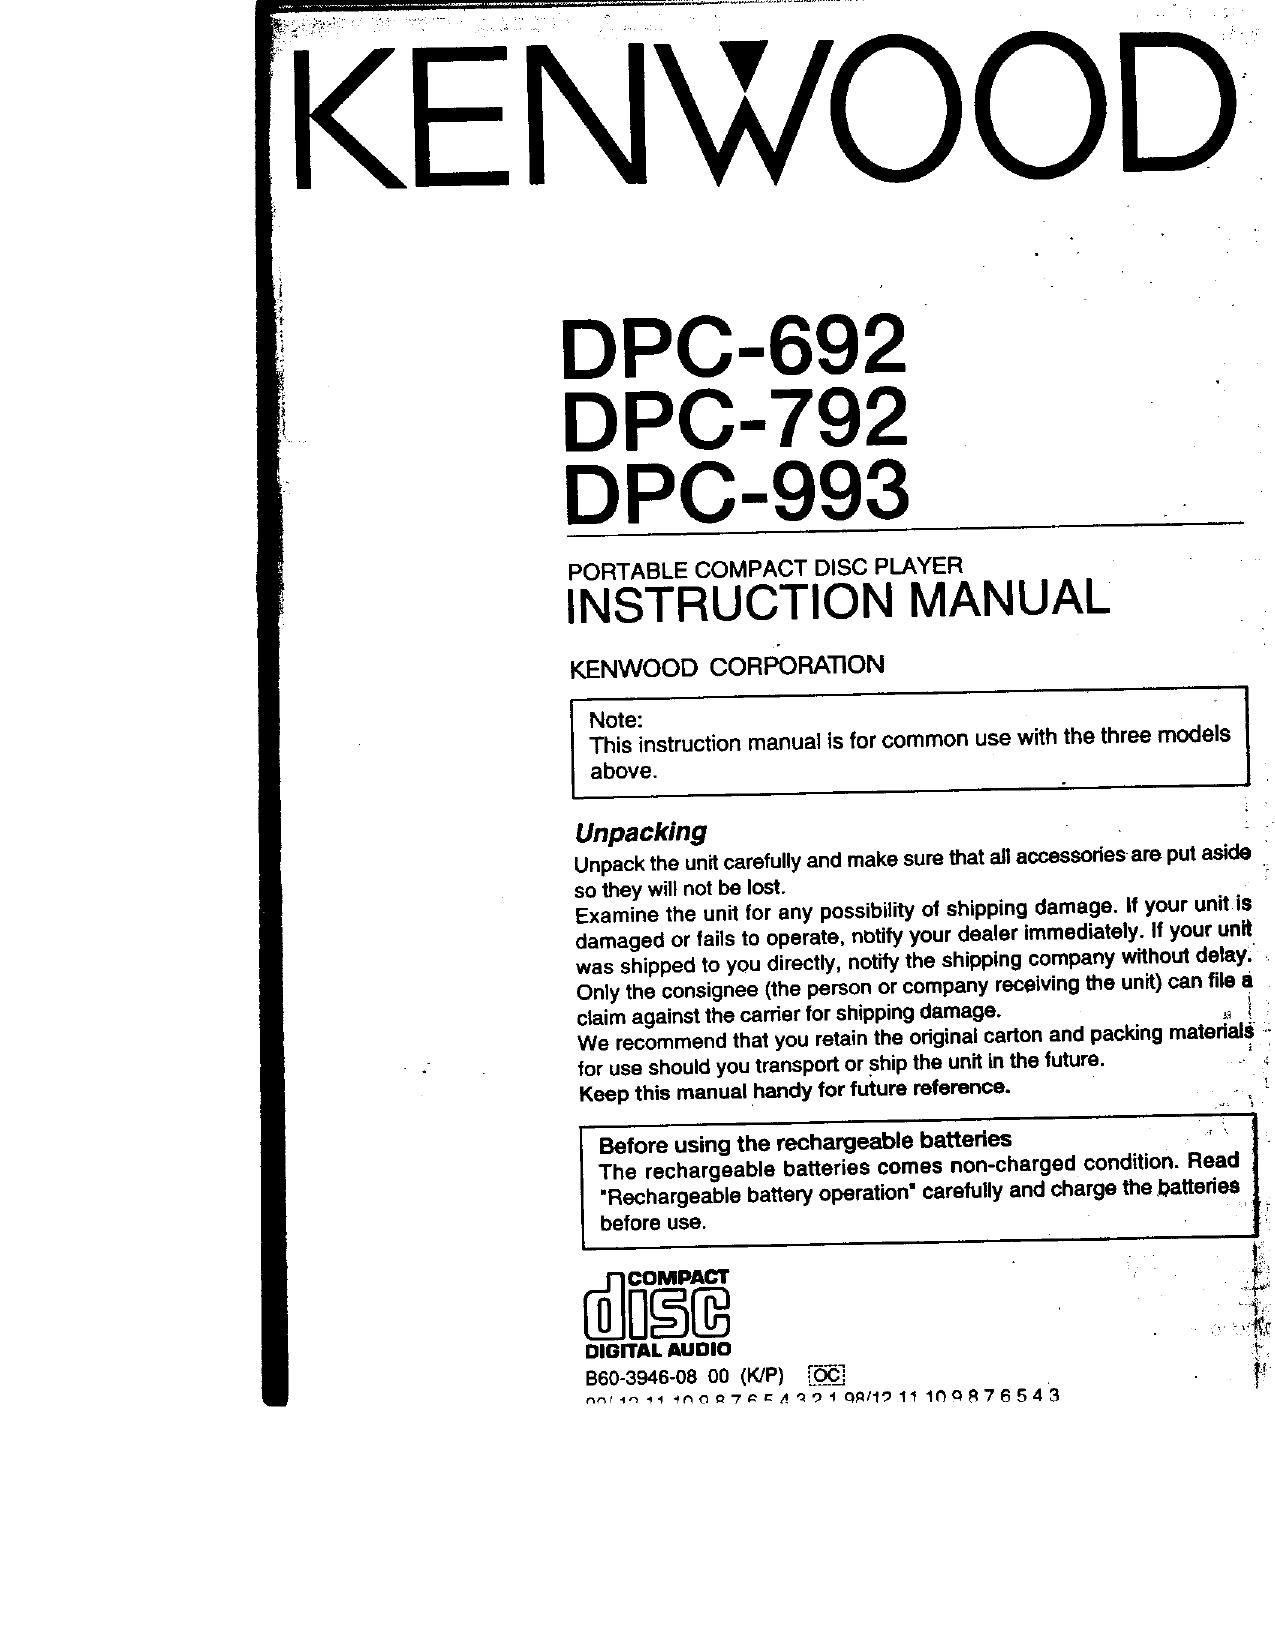 Kenwood DPC 993 Owners Manual